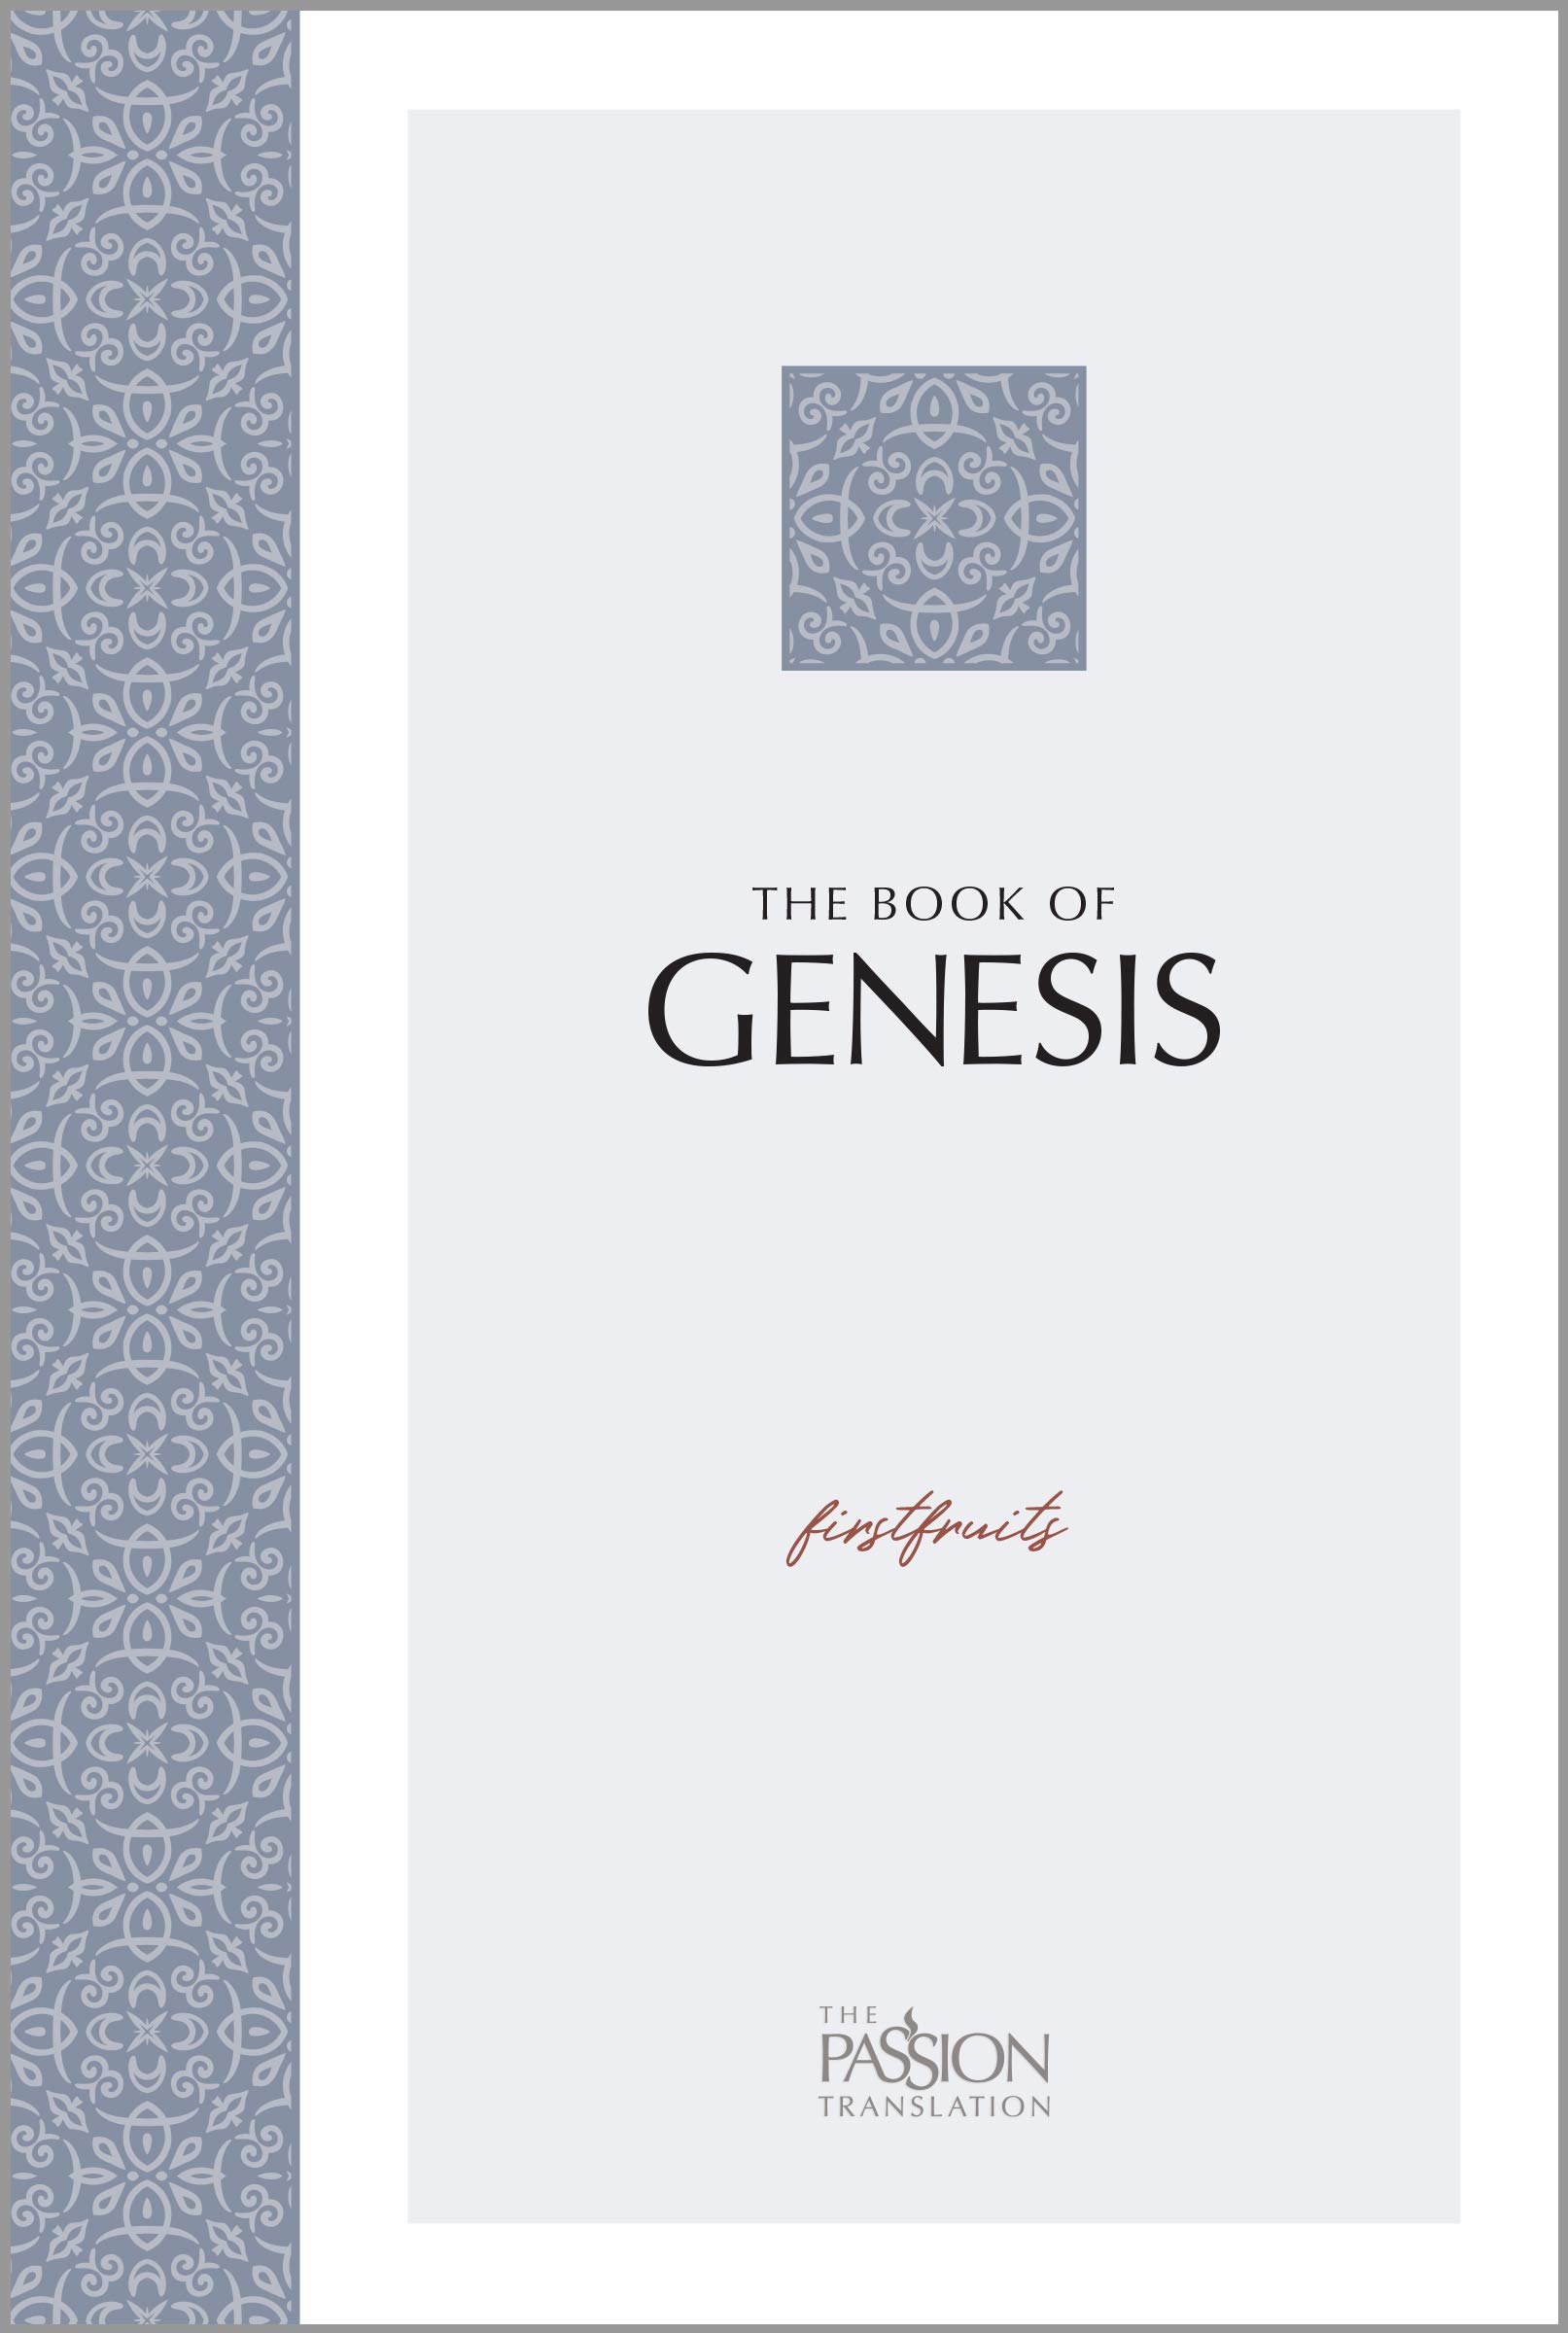 More information on Genesis Passion Translation